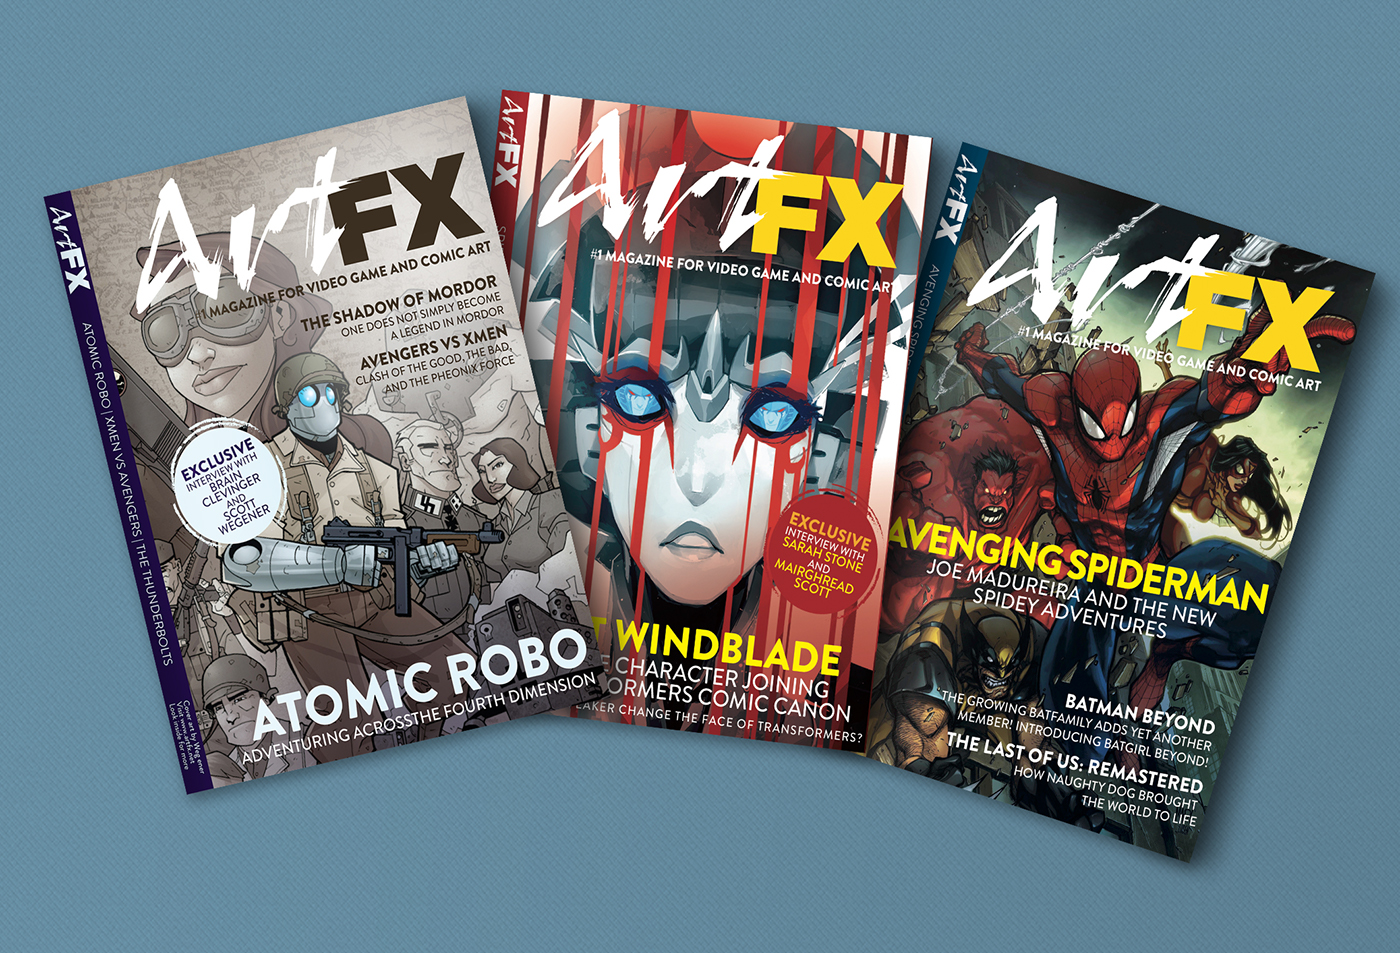 spiderman Windblade Atomic Robo comics Video Games magazine article spread mock design Transformers Magazine design publication layout destiny